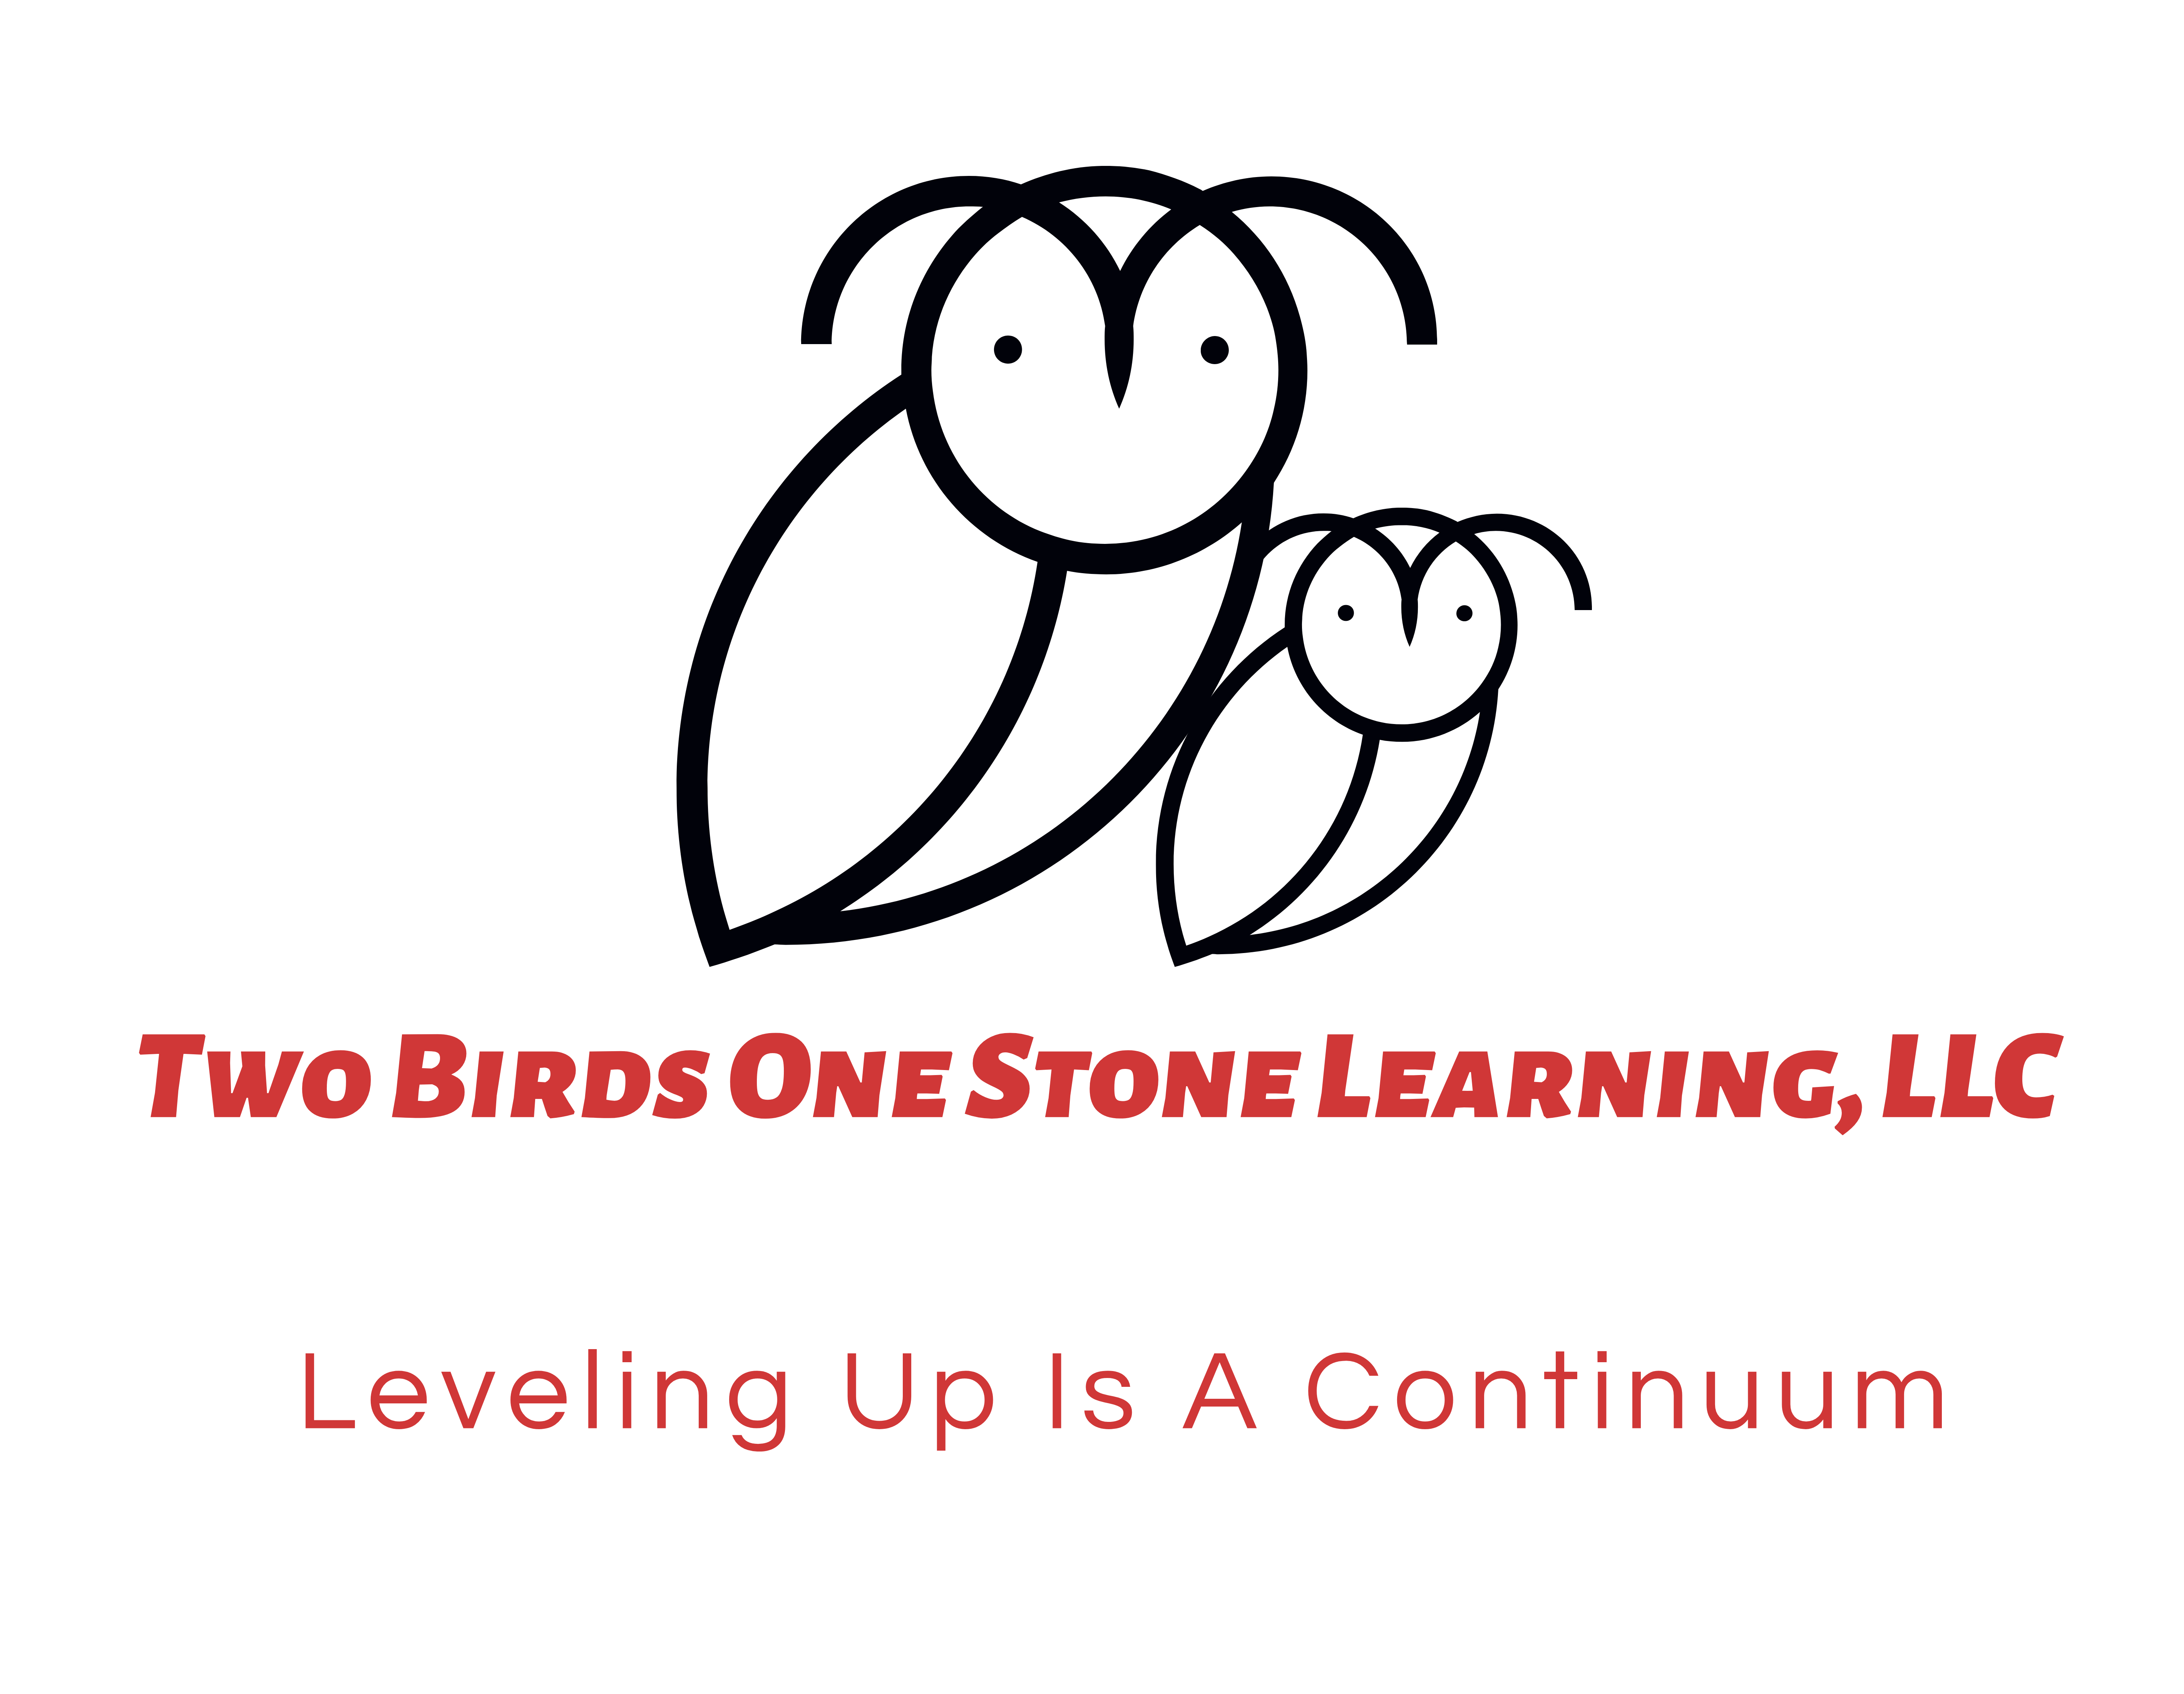 Two Birds One Stone Learning, LLC logo